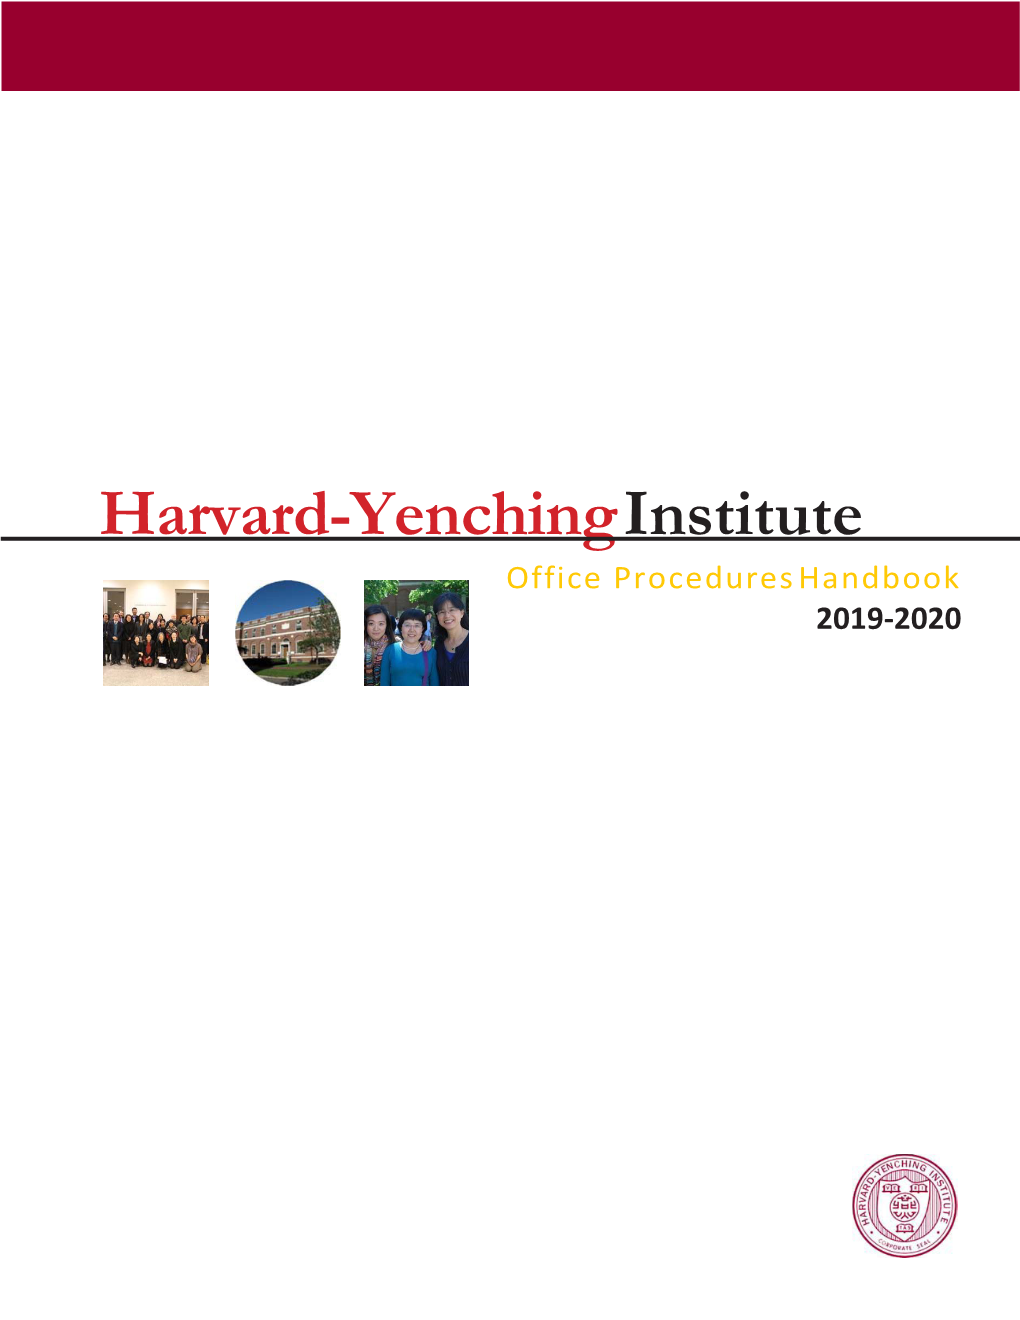 Harvard University Interactive Map Available At